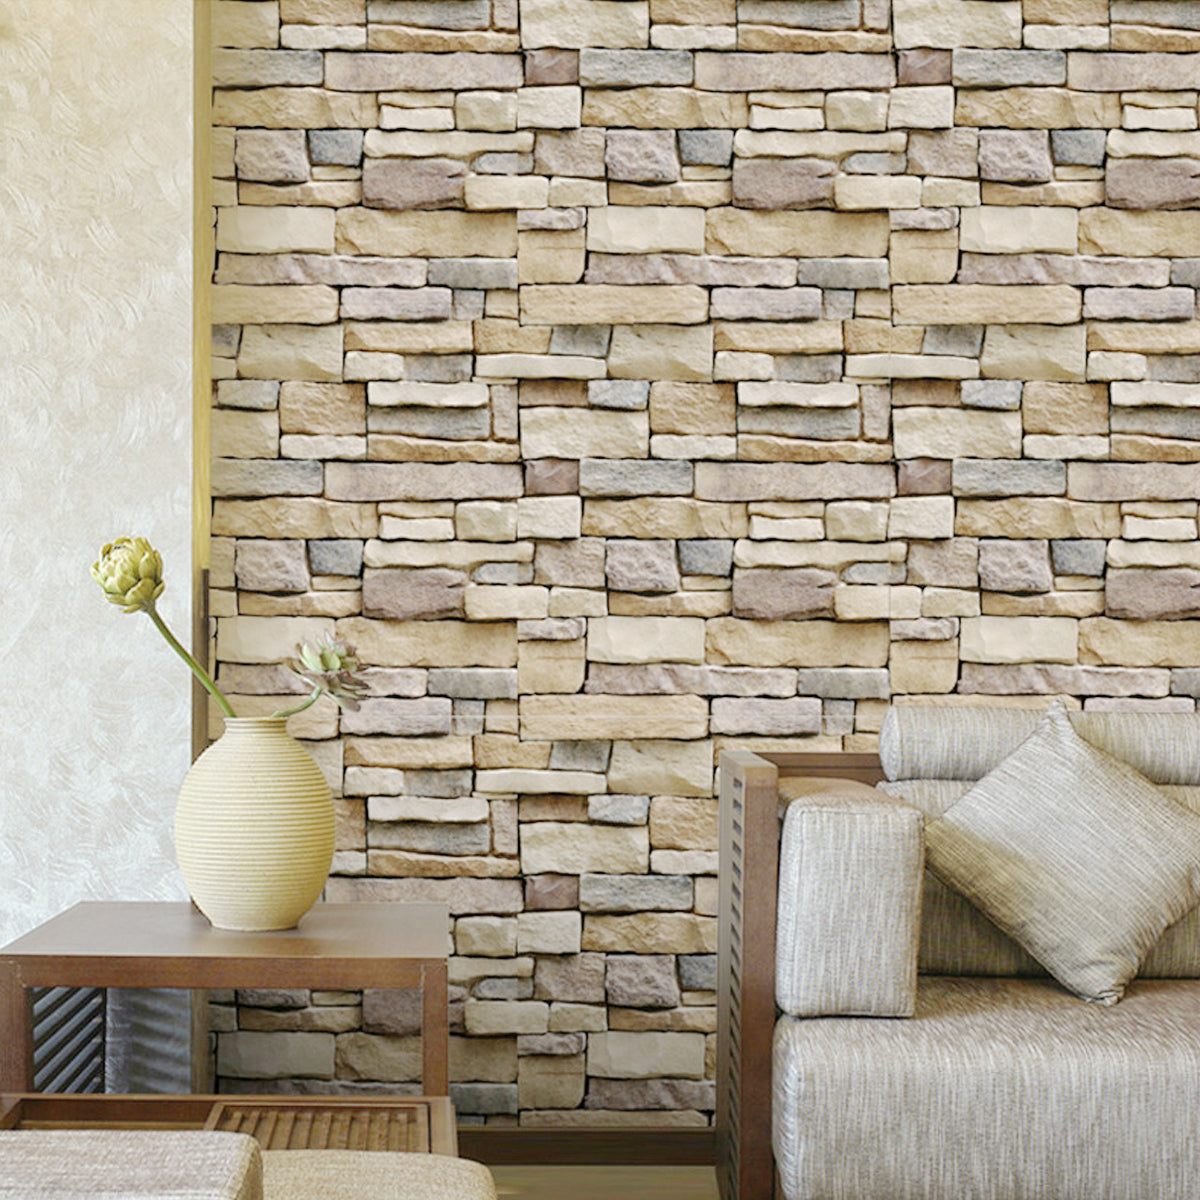 3D Wall Paper Brick Stone Pattern Sticker Rolls Self-adhesive Backdrop DIY Room Decor